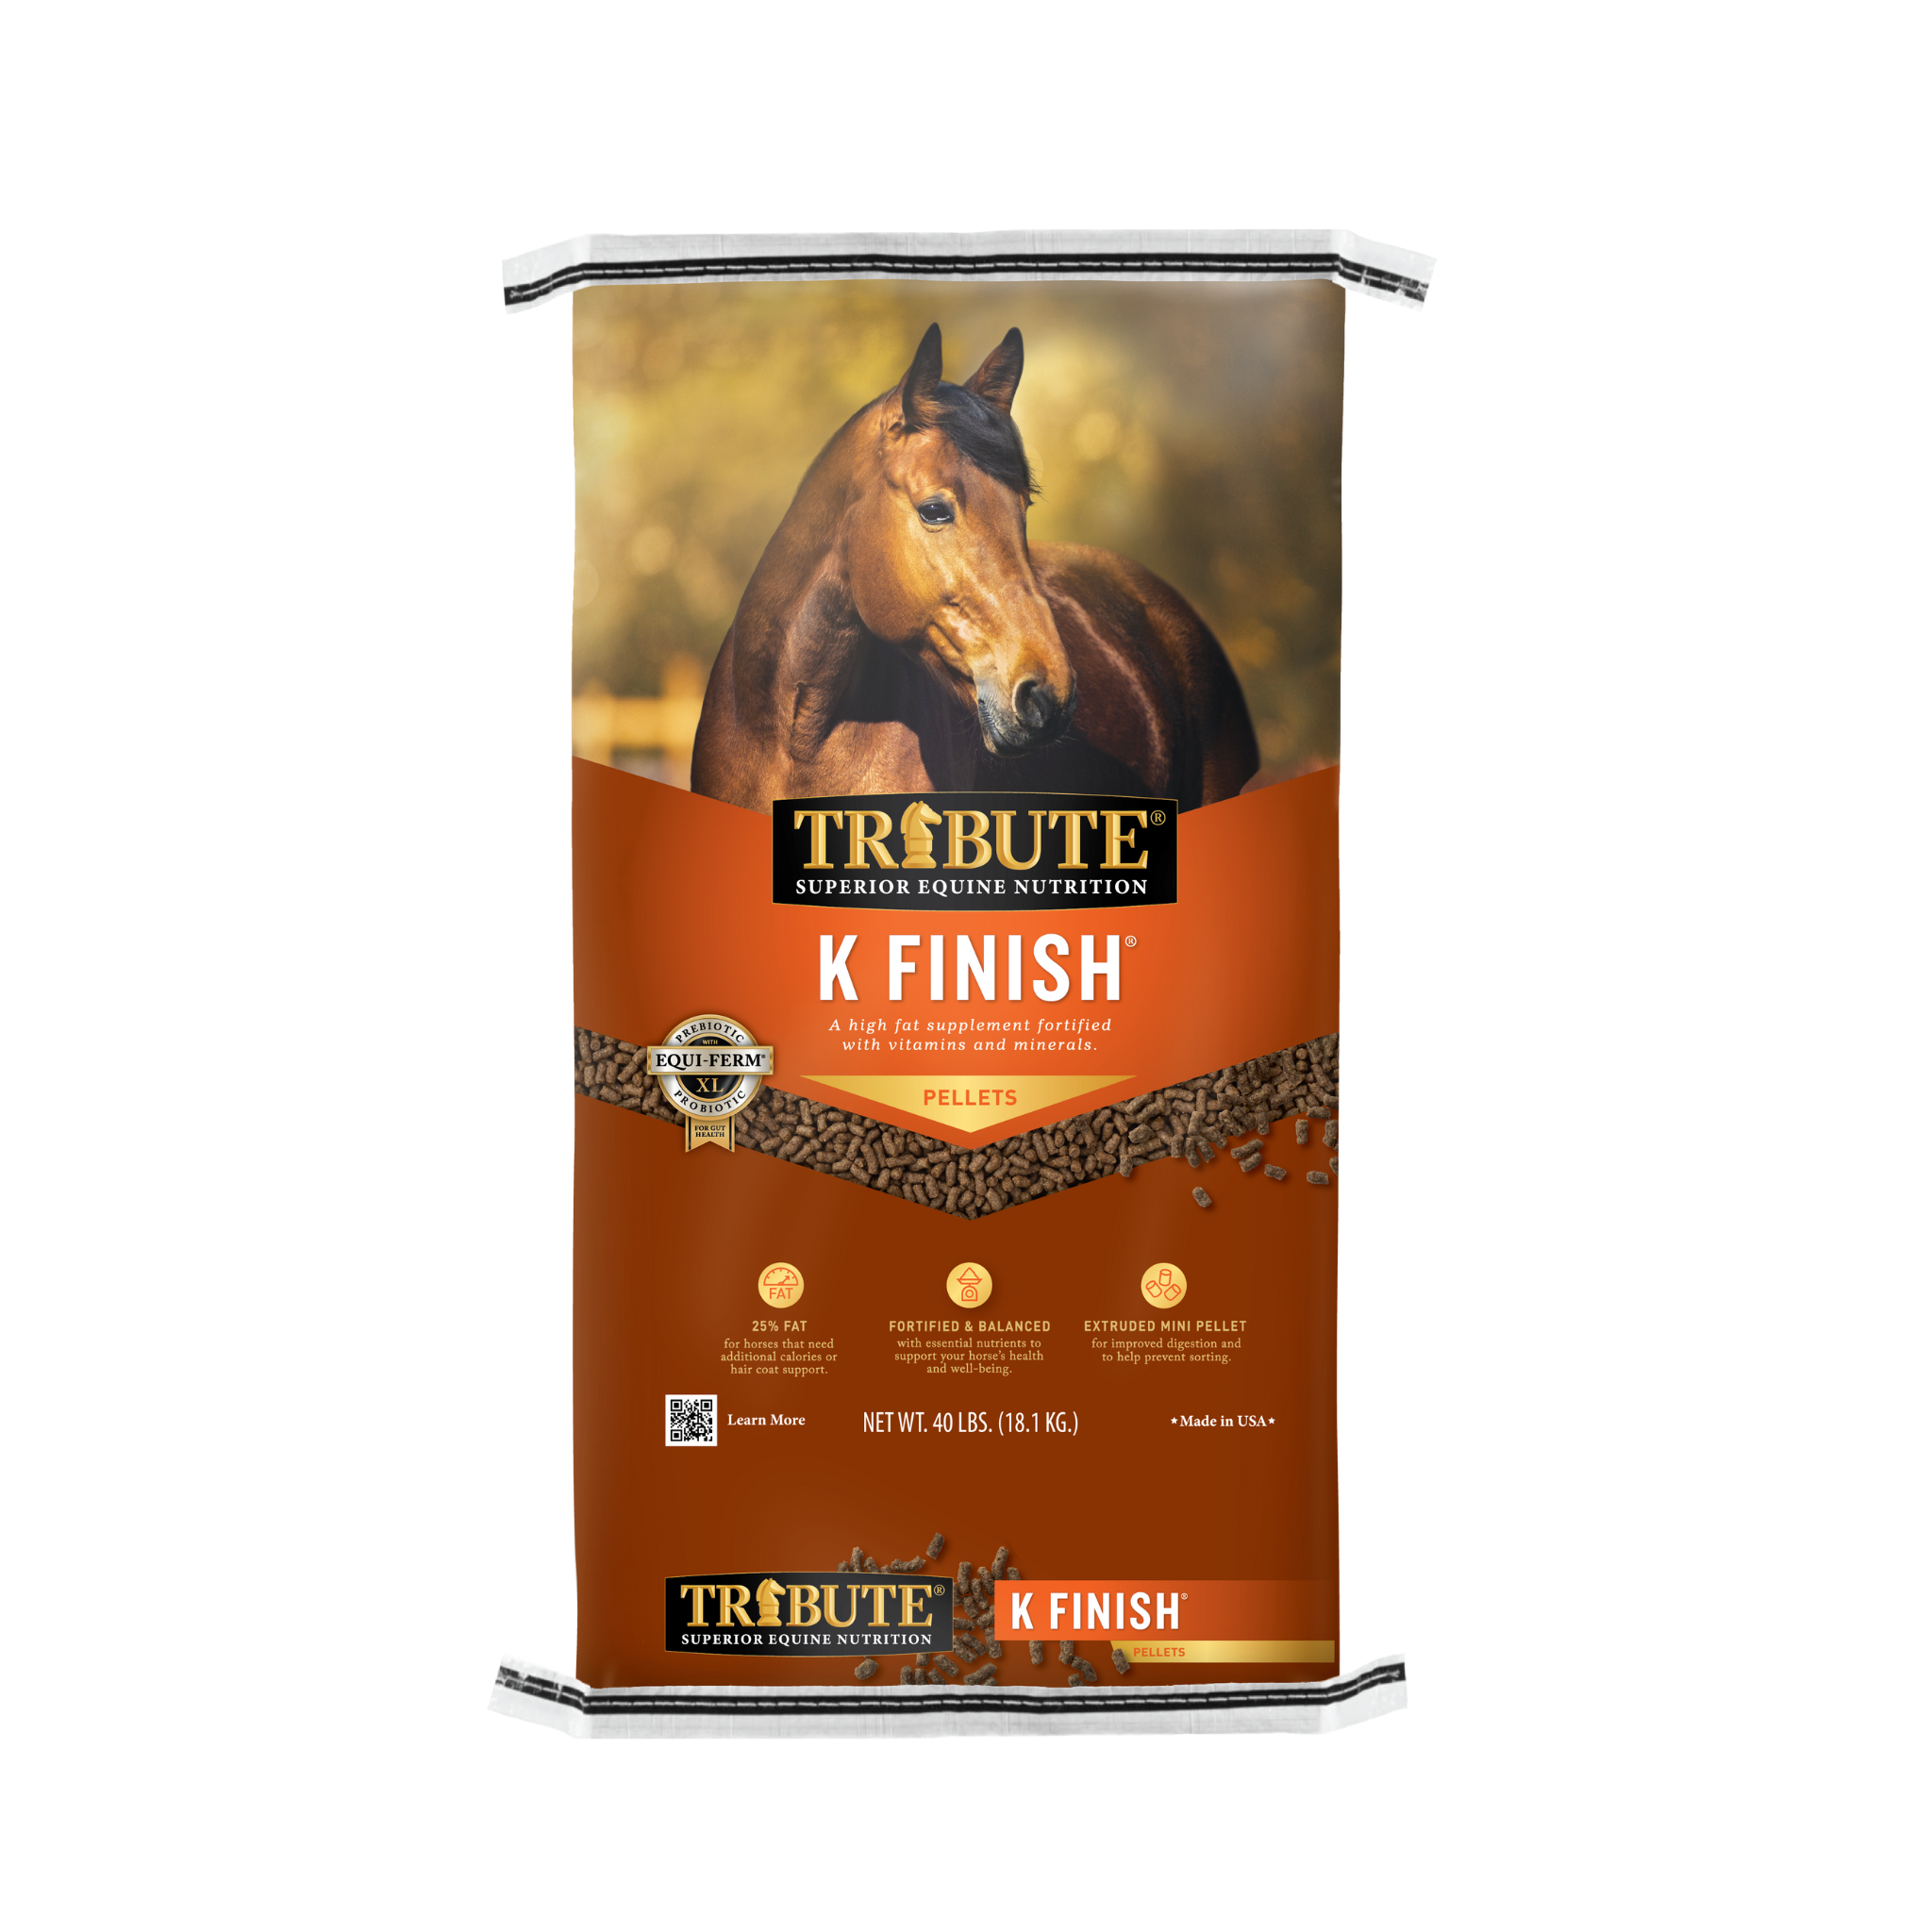 Tribute K Finish High-Fat Horse Supplement